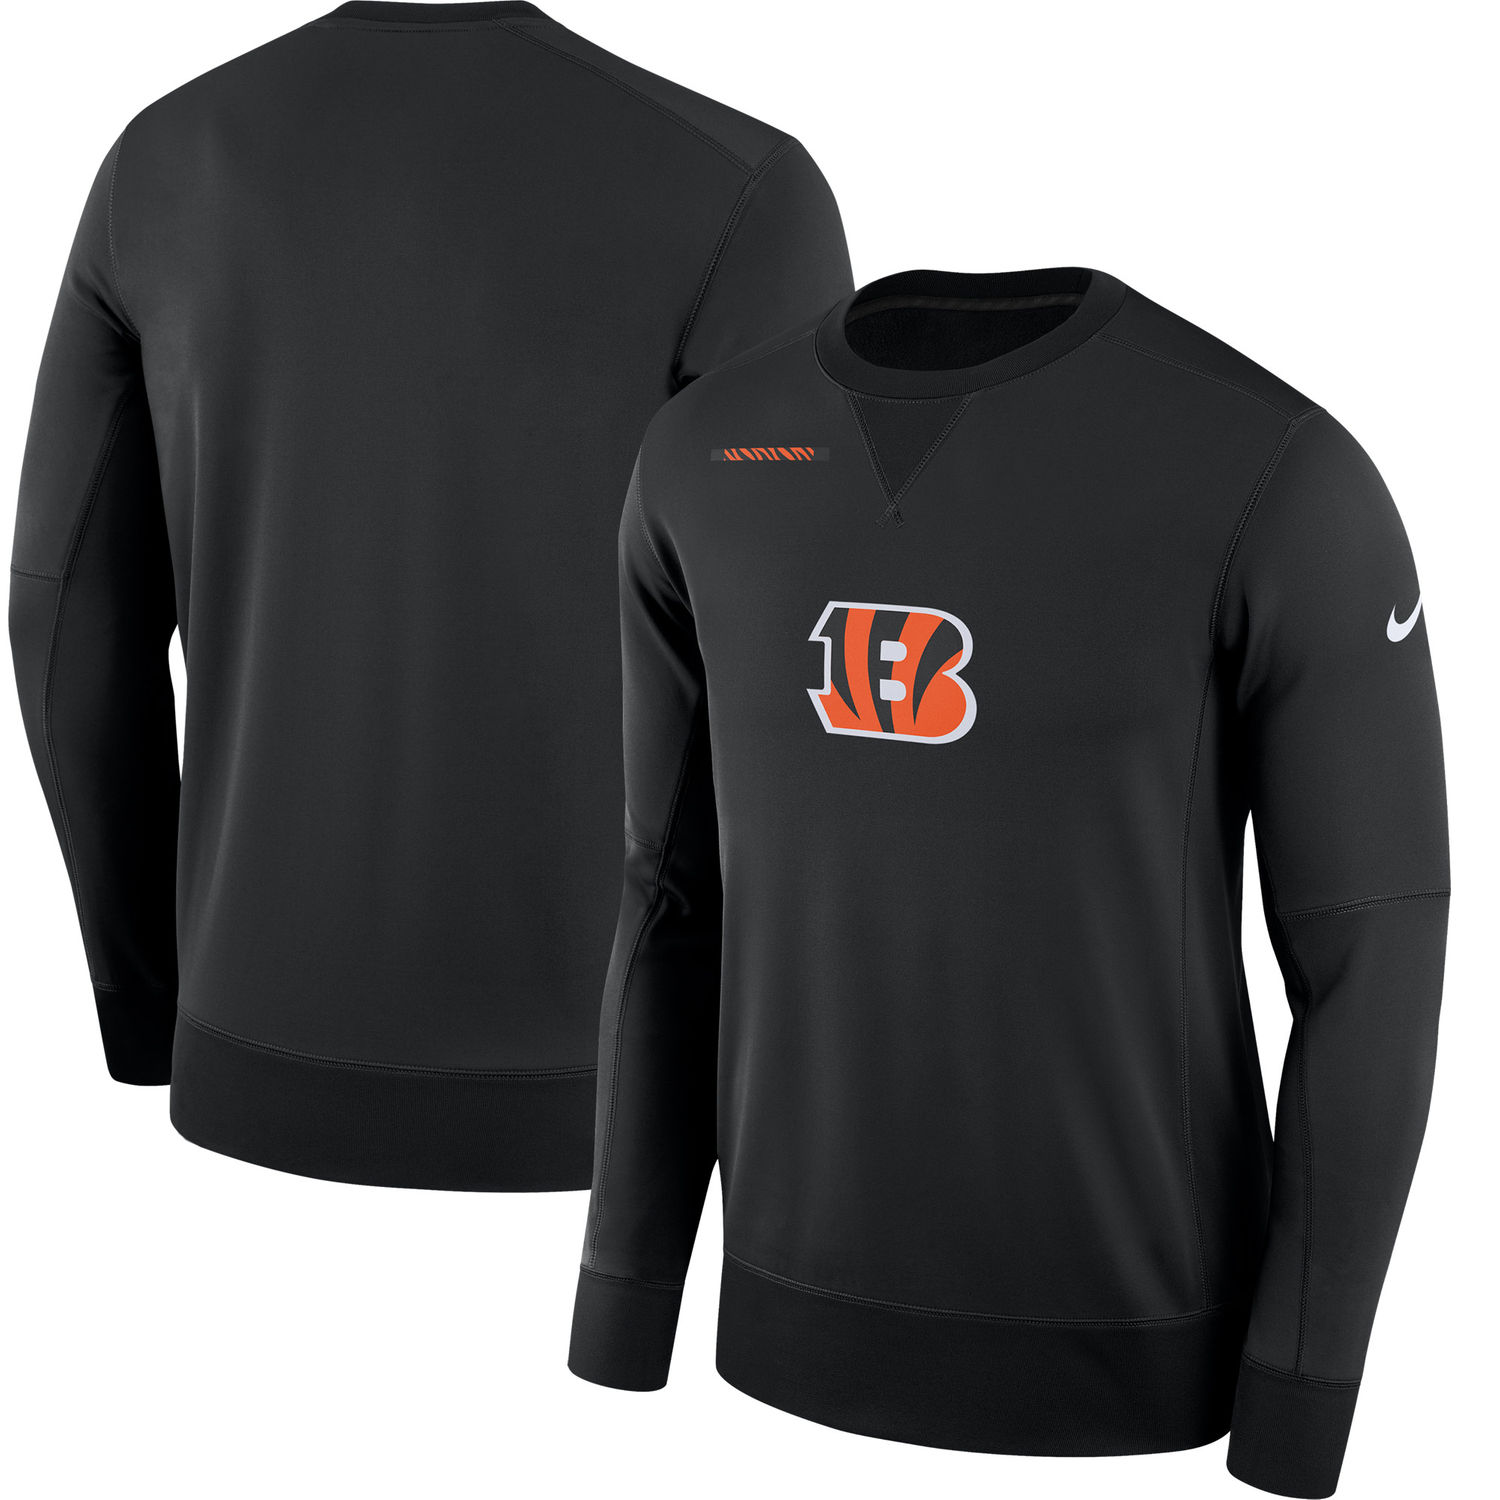 Mens Cincinnati Bengals Nike Black Sideline Team Logo Performance Sweatshirt